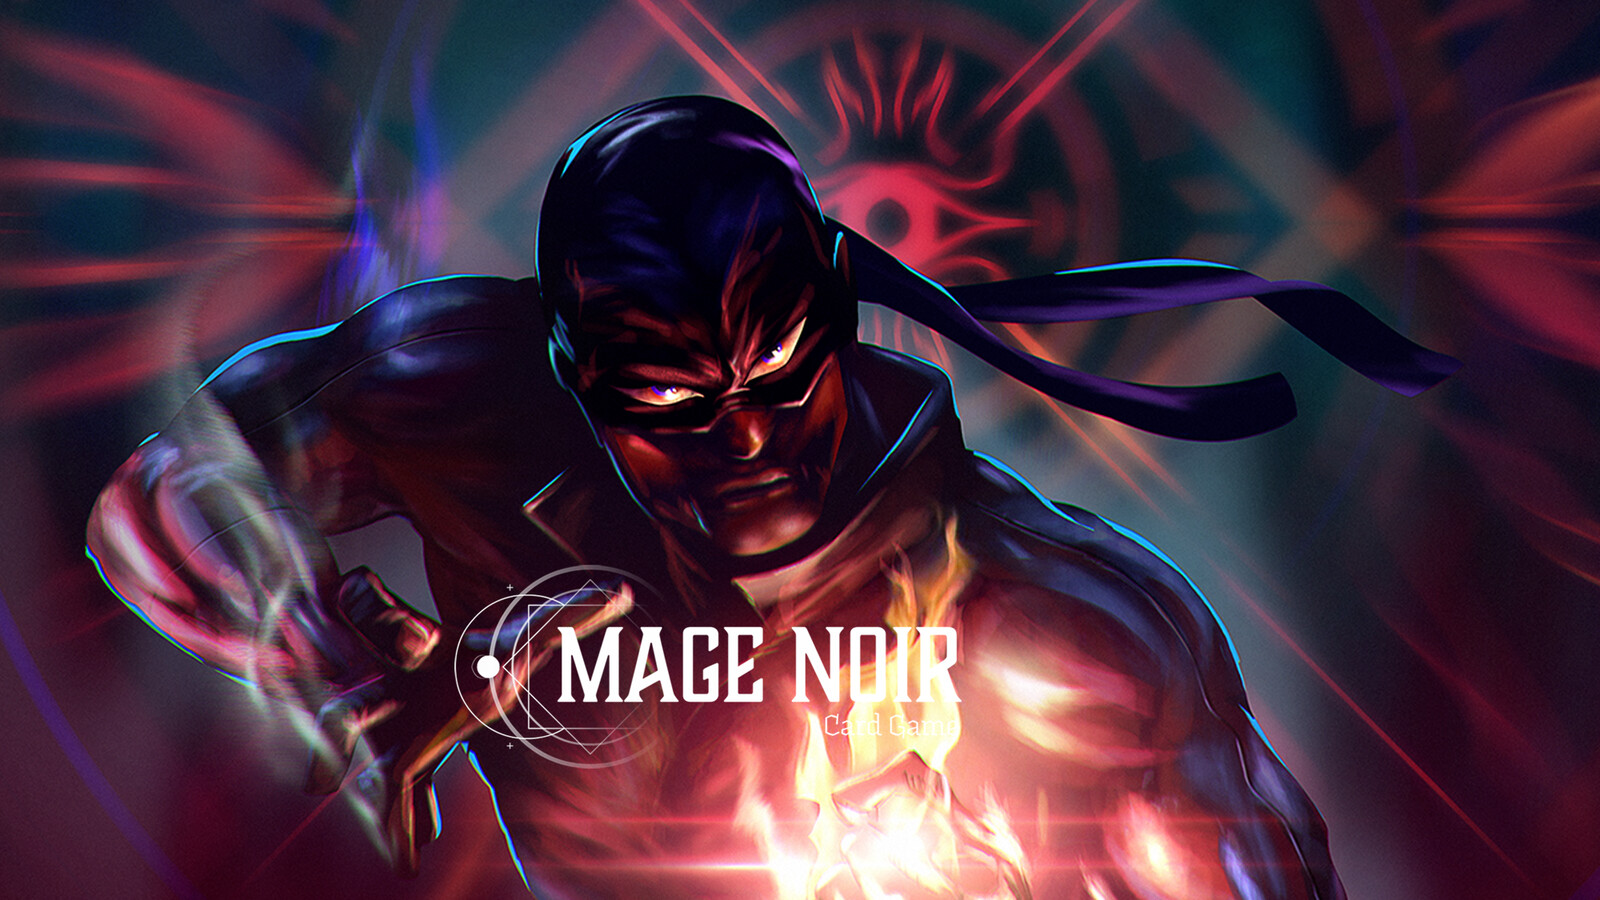 Mage Noir (spell of fire)